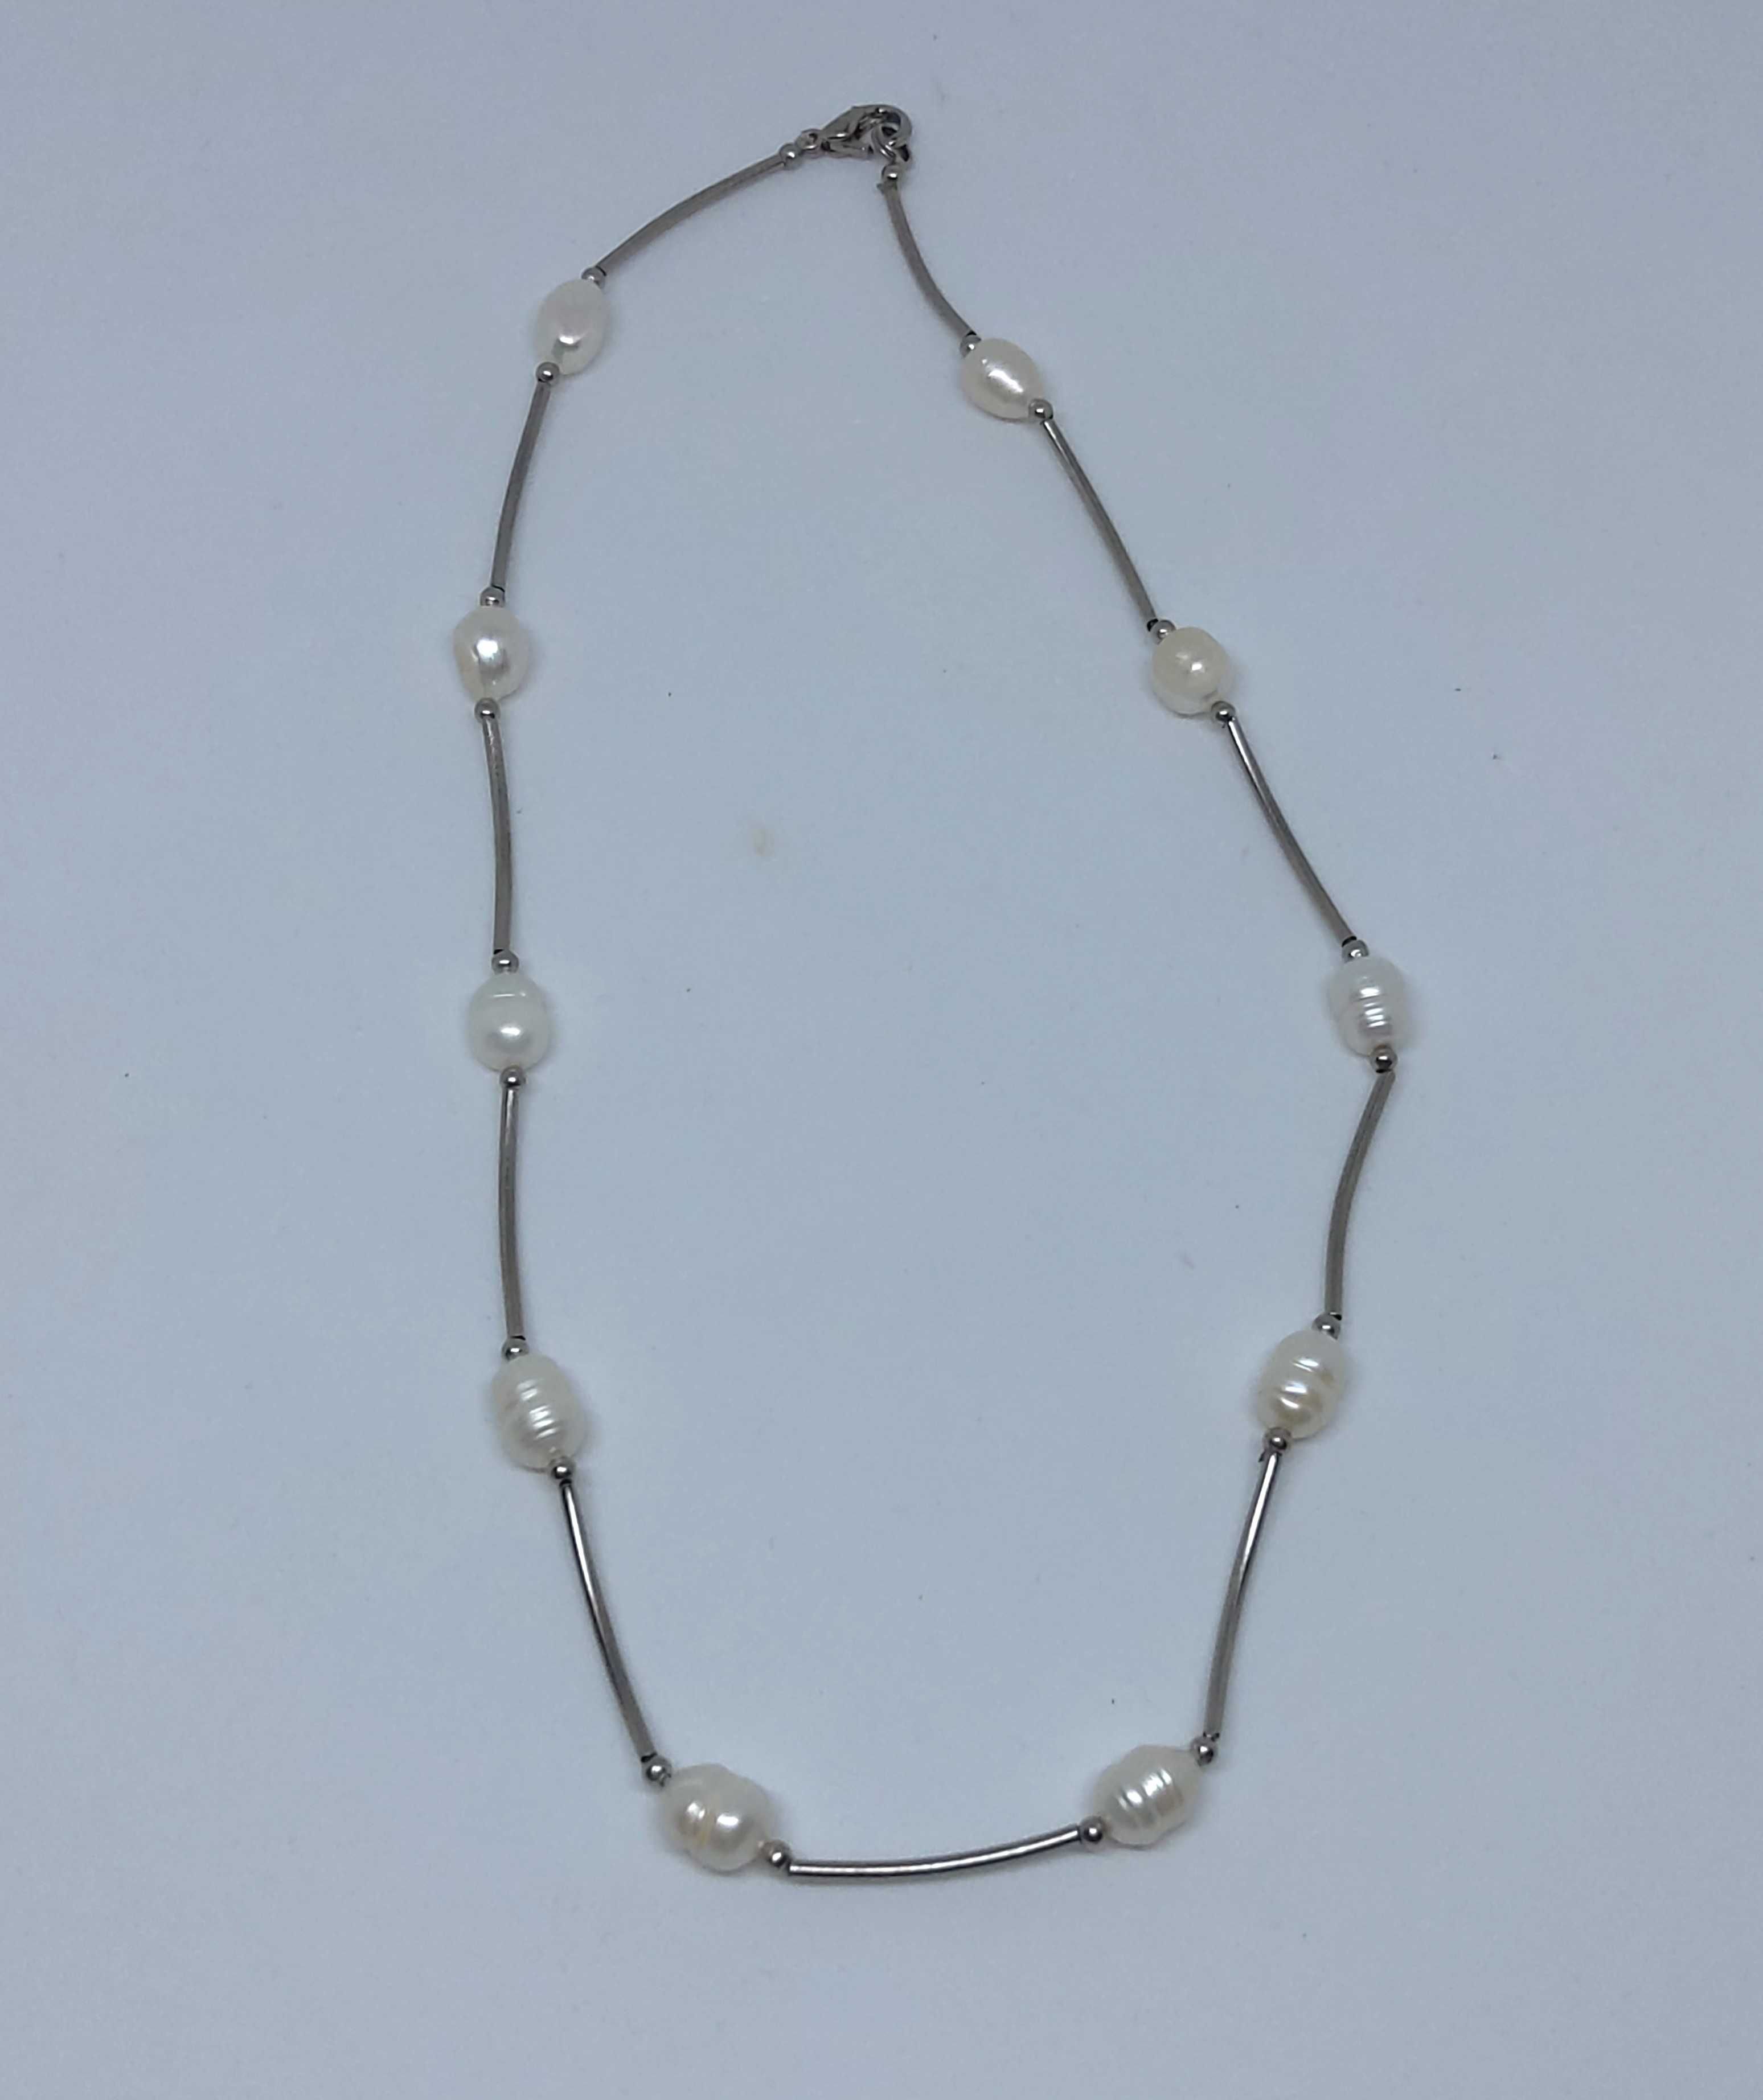 Naszyjnik łańcuszek posrebrzany z perełkami perły